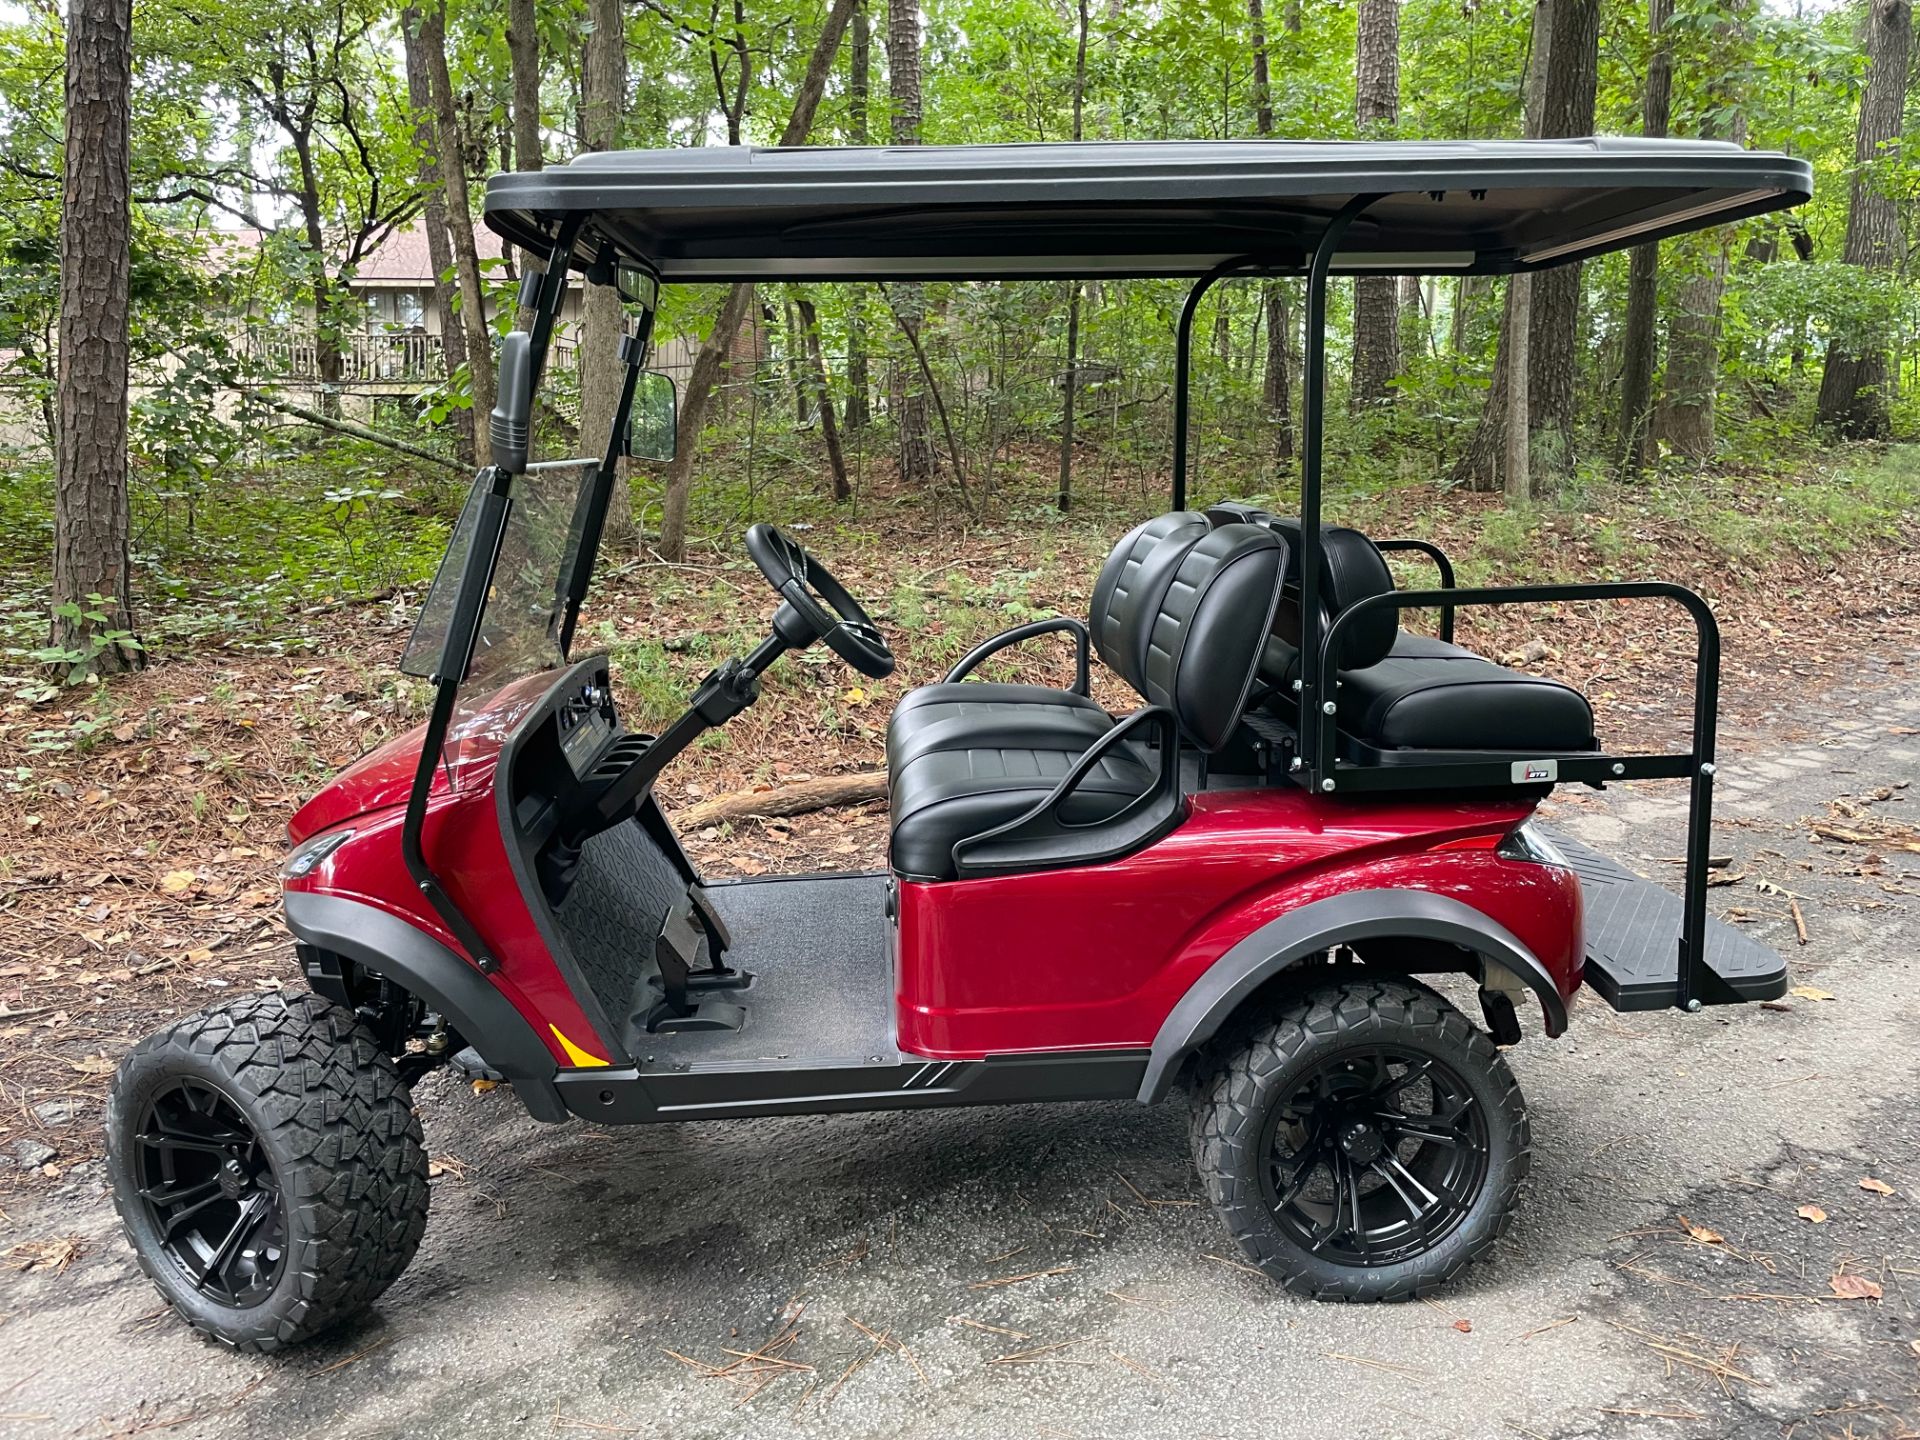 2023 Madjax Storm 48v lithium 4 seat golf cart in Woodstock, Georgia - Photo 2